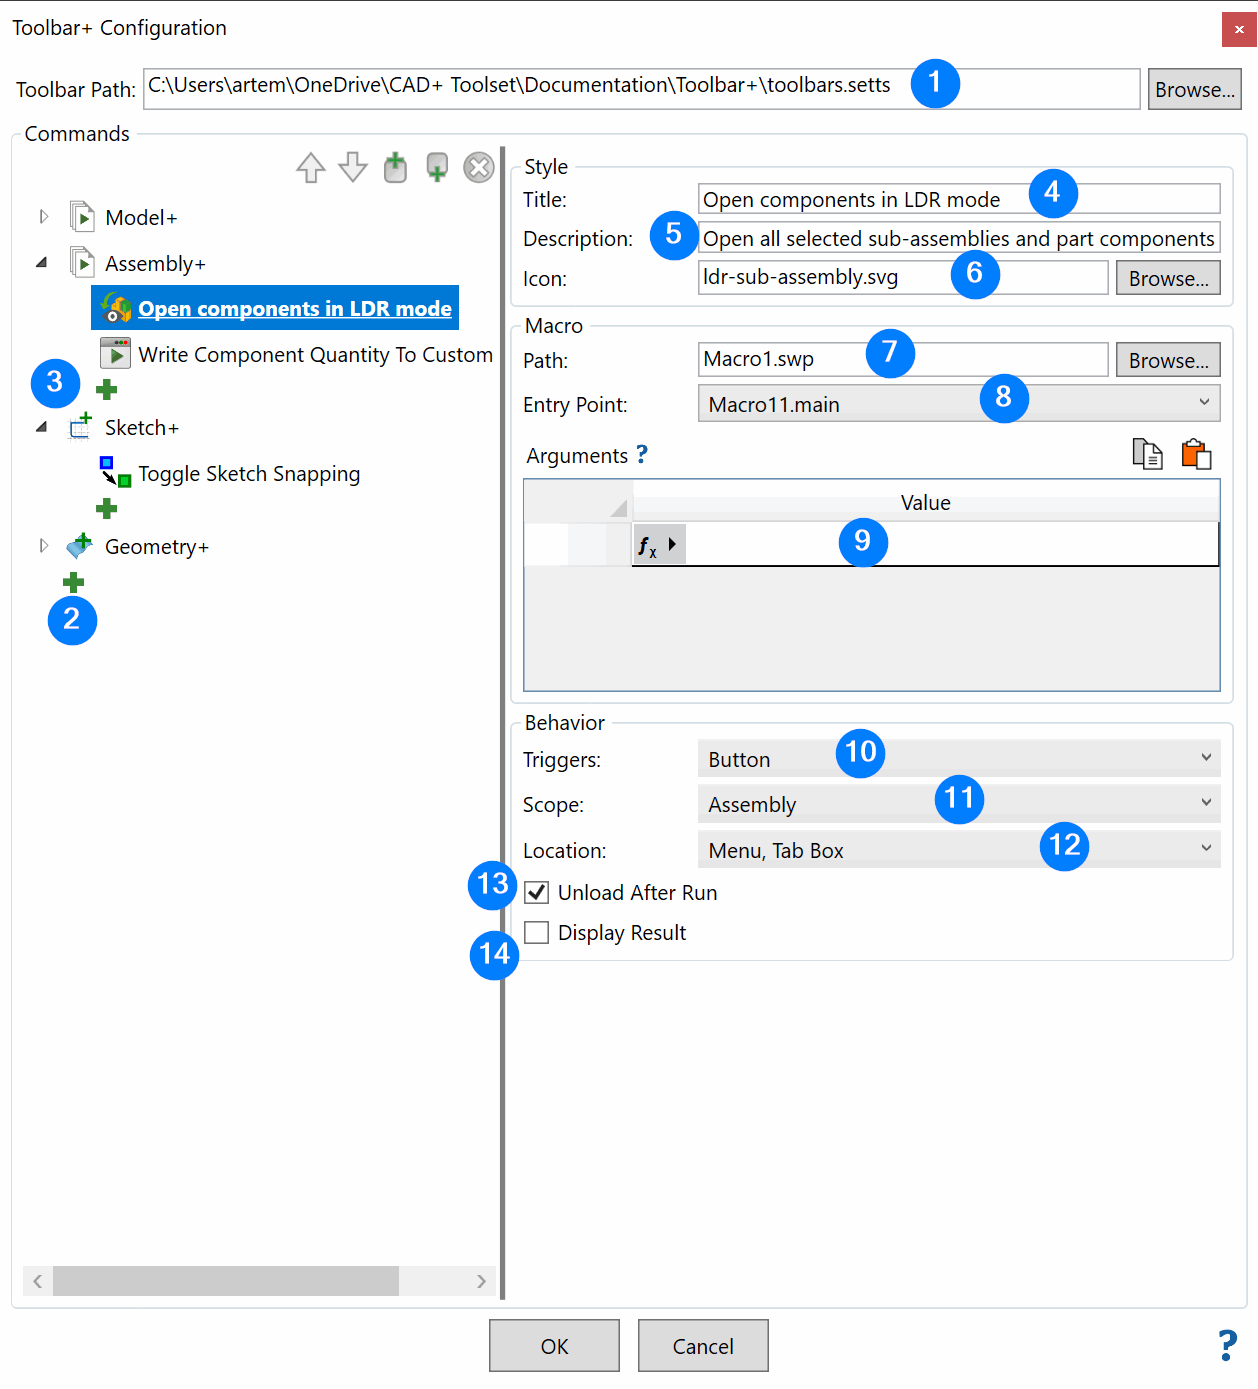 Editing macro button in Toolbar+